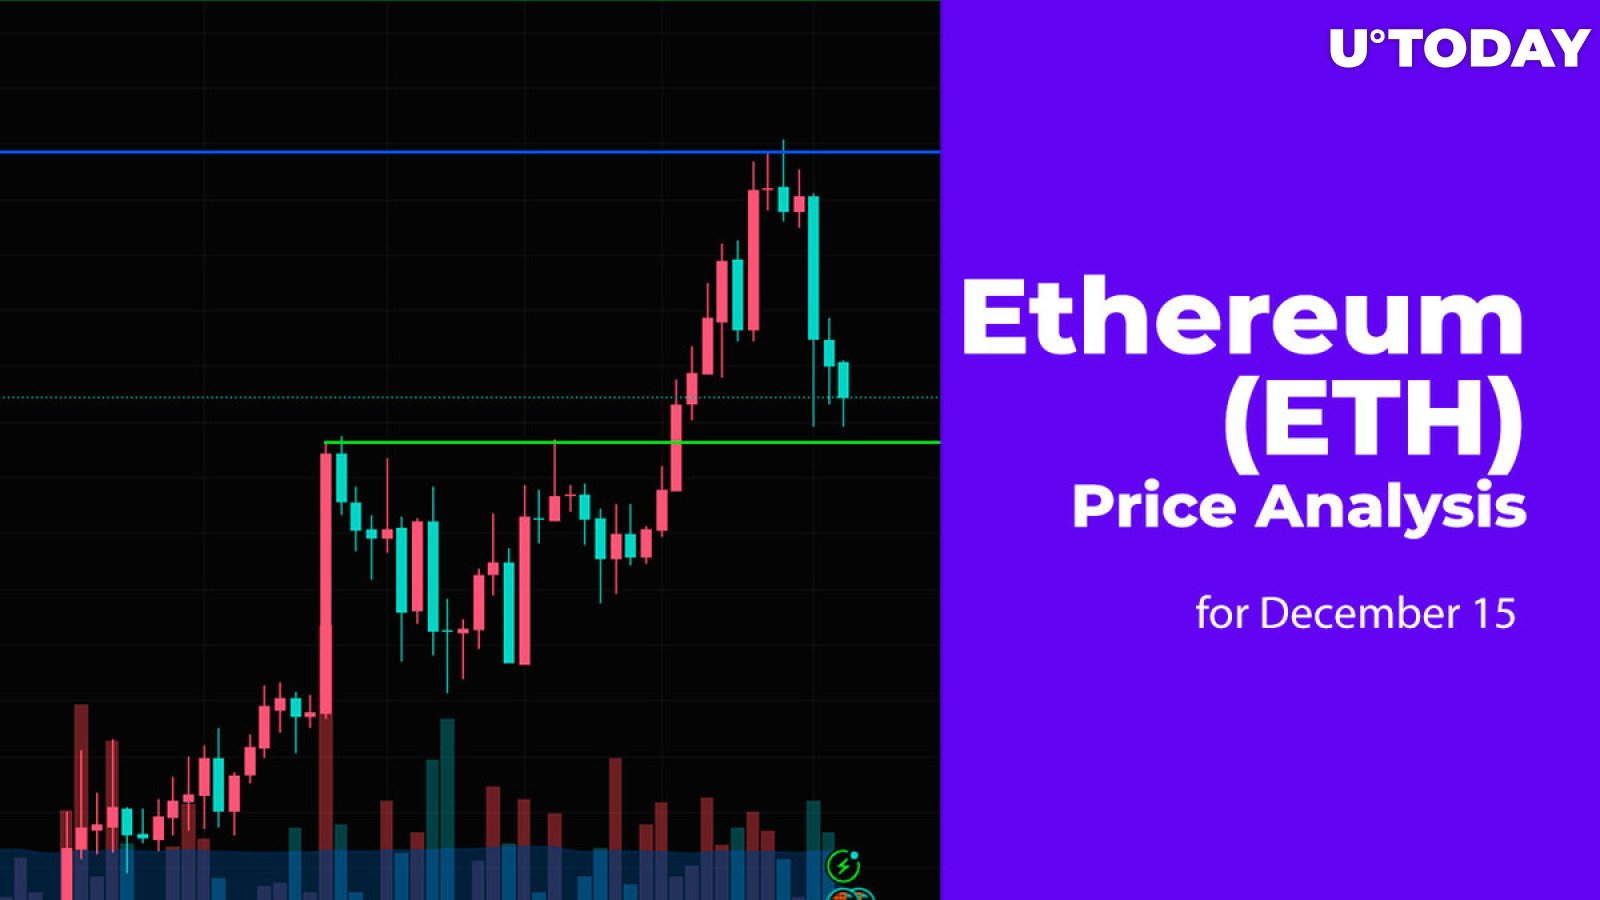 Ethereum (ETH) Price Analysis for December 15